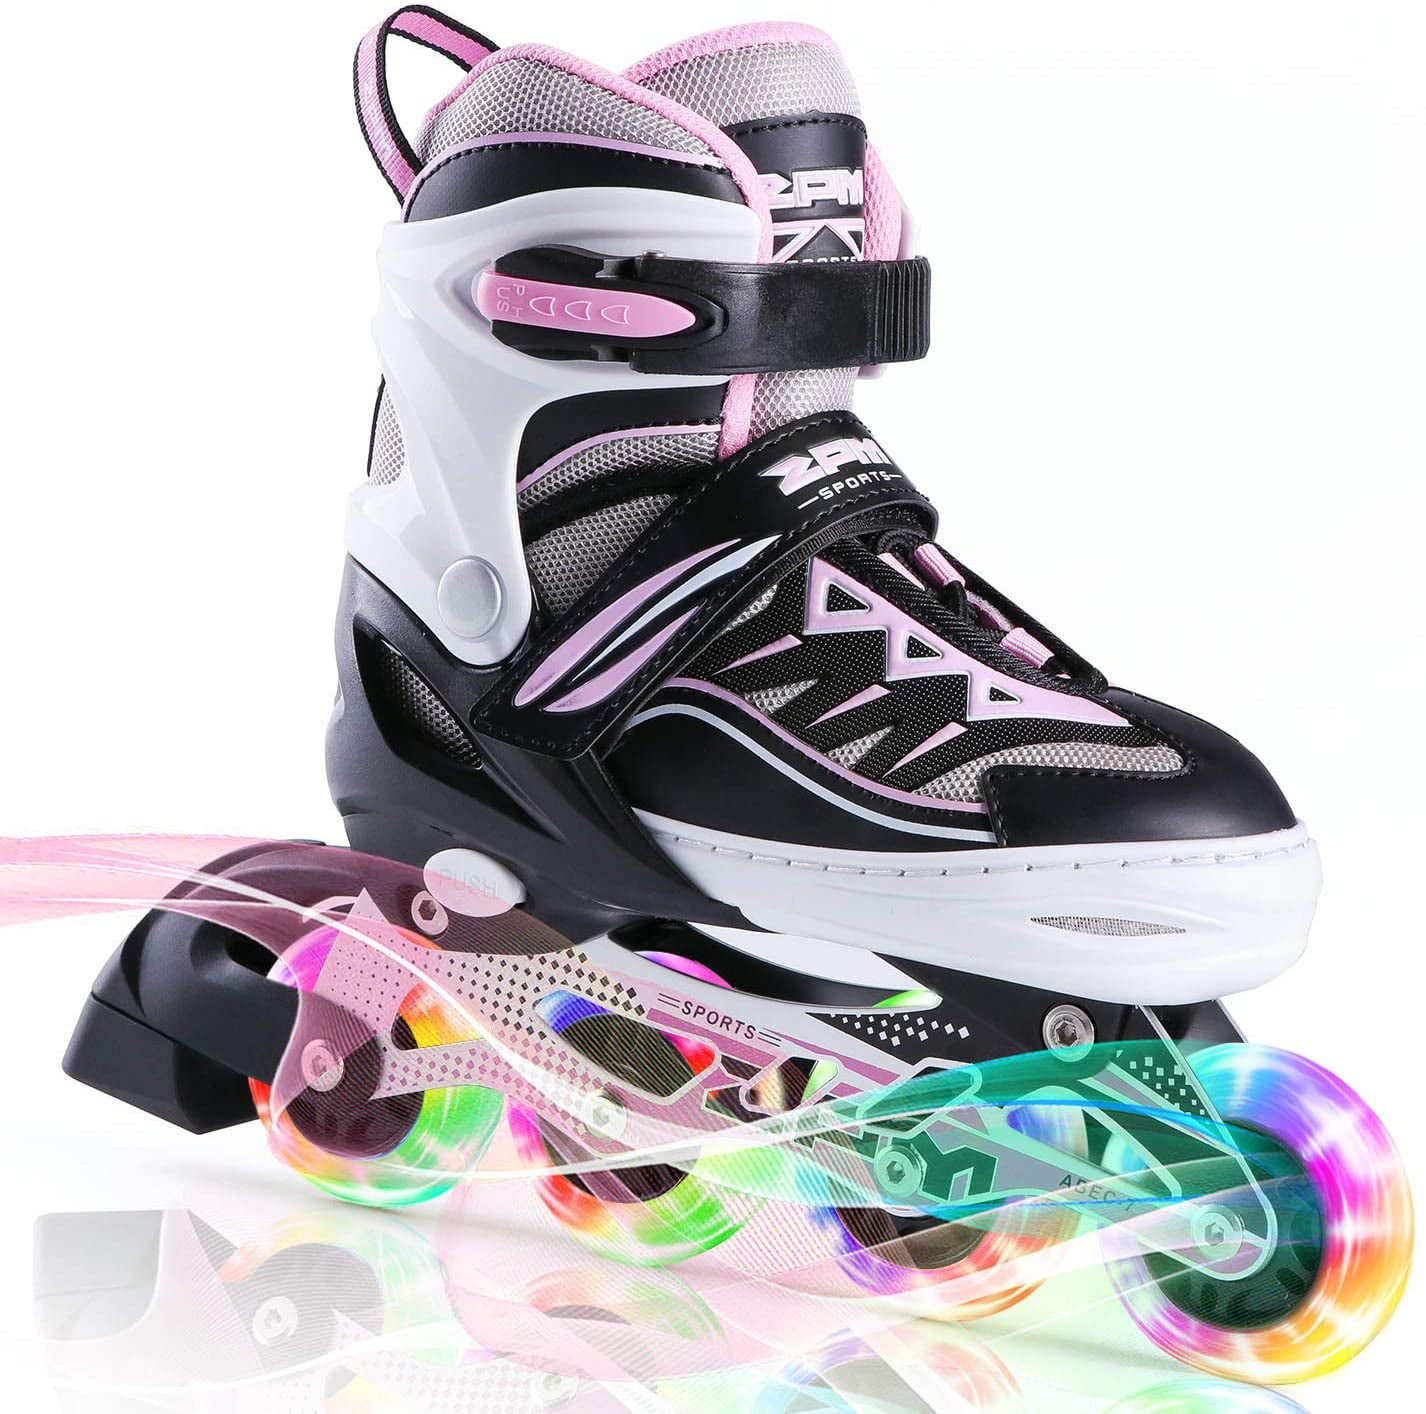 Eliiti Inline Skates for Men Women Size 7 8 9 10 11 Adjustable Roller Blades